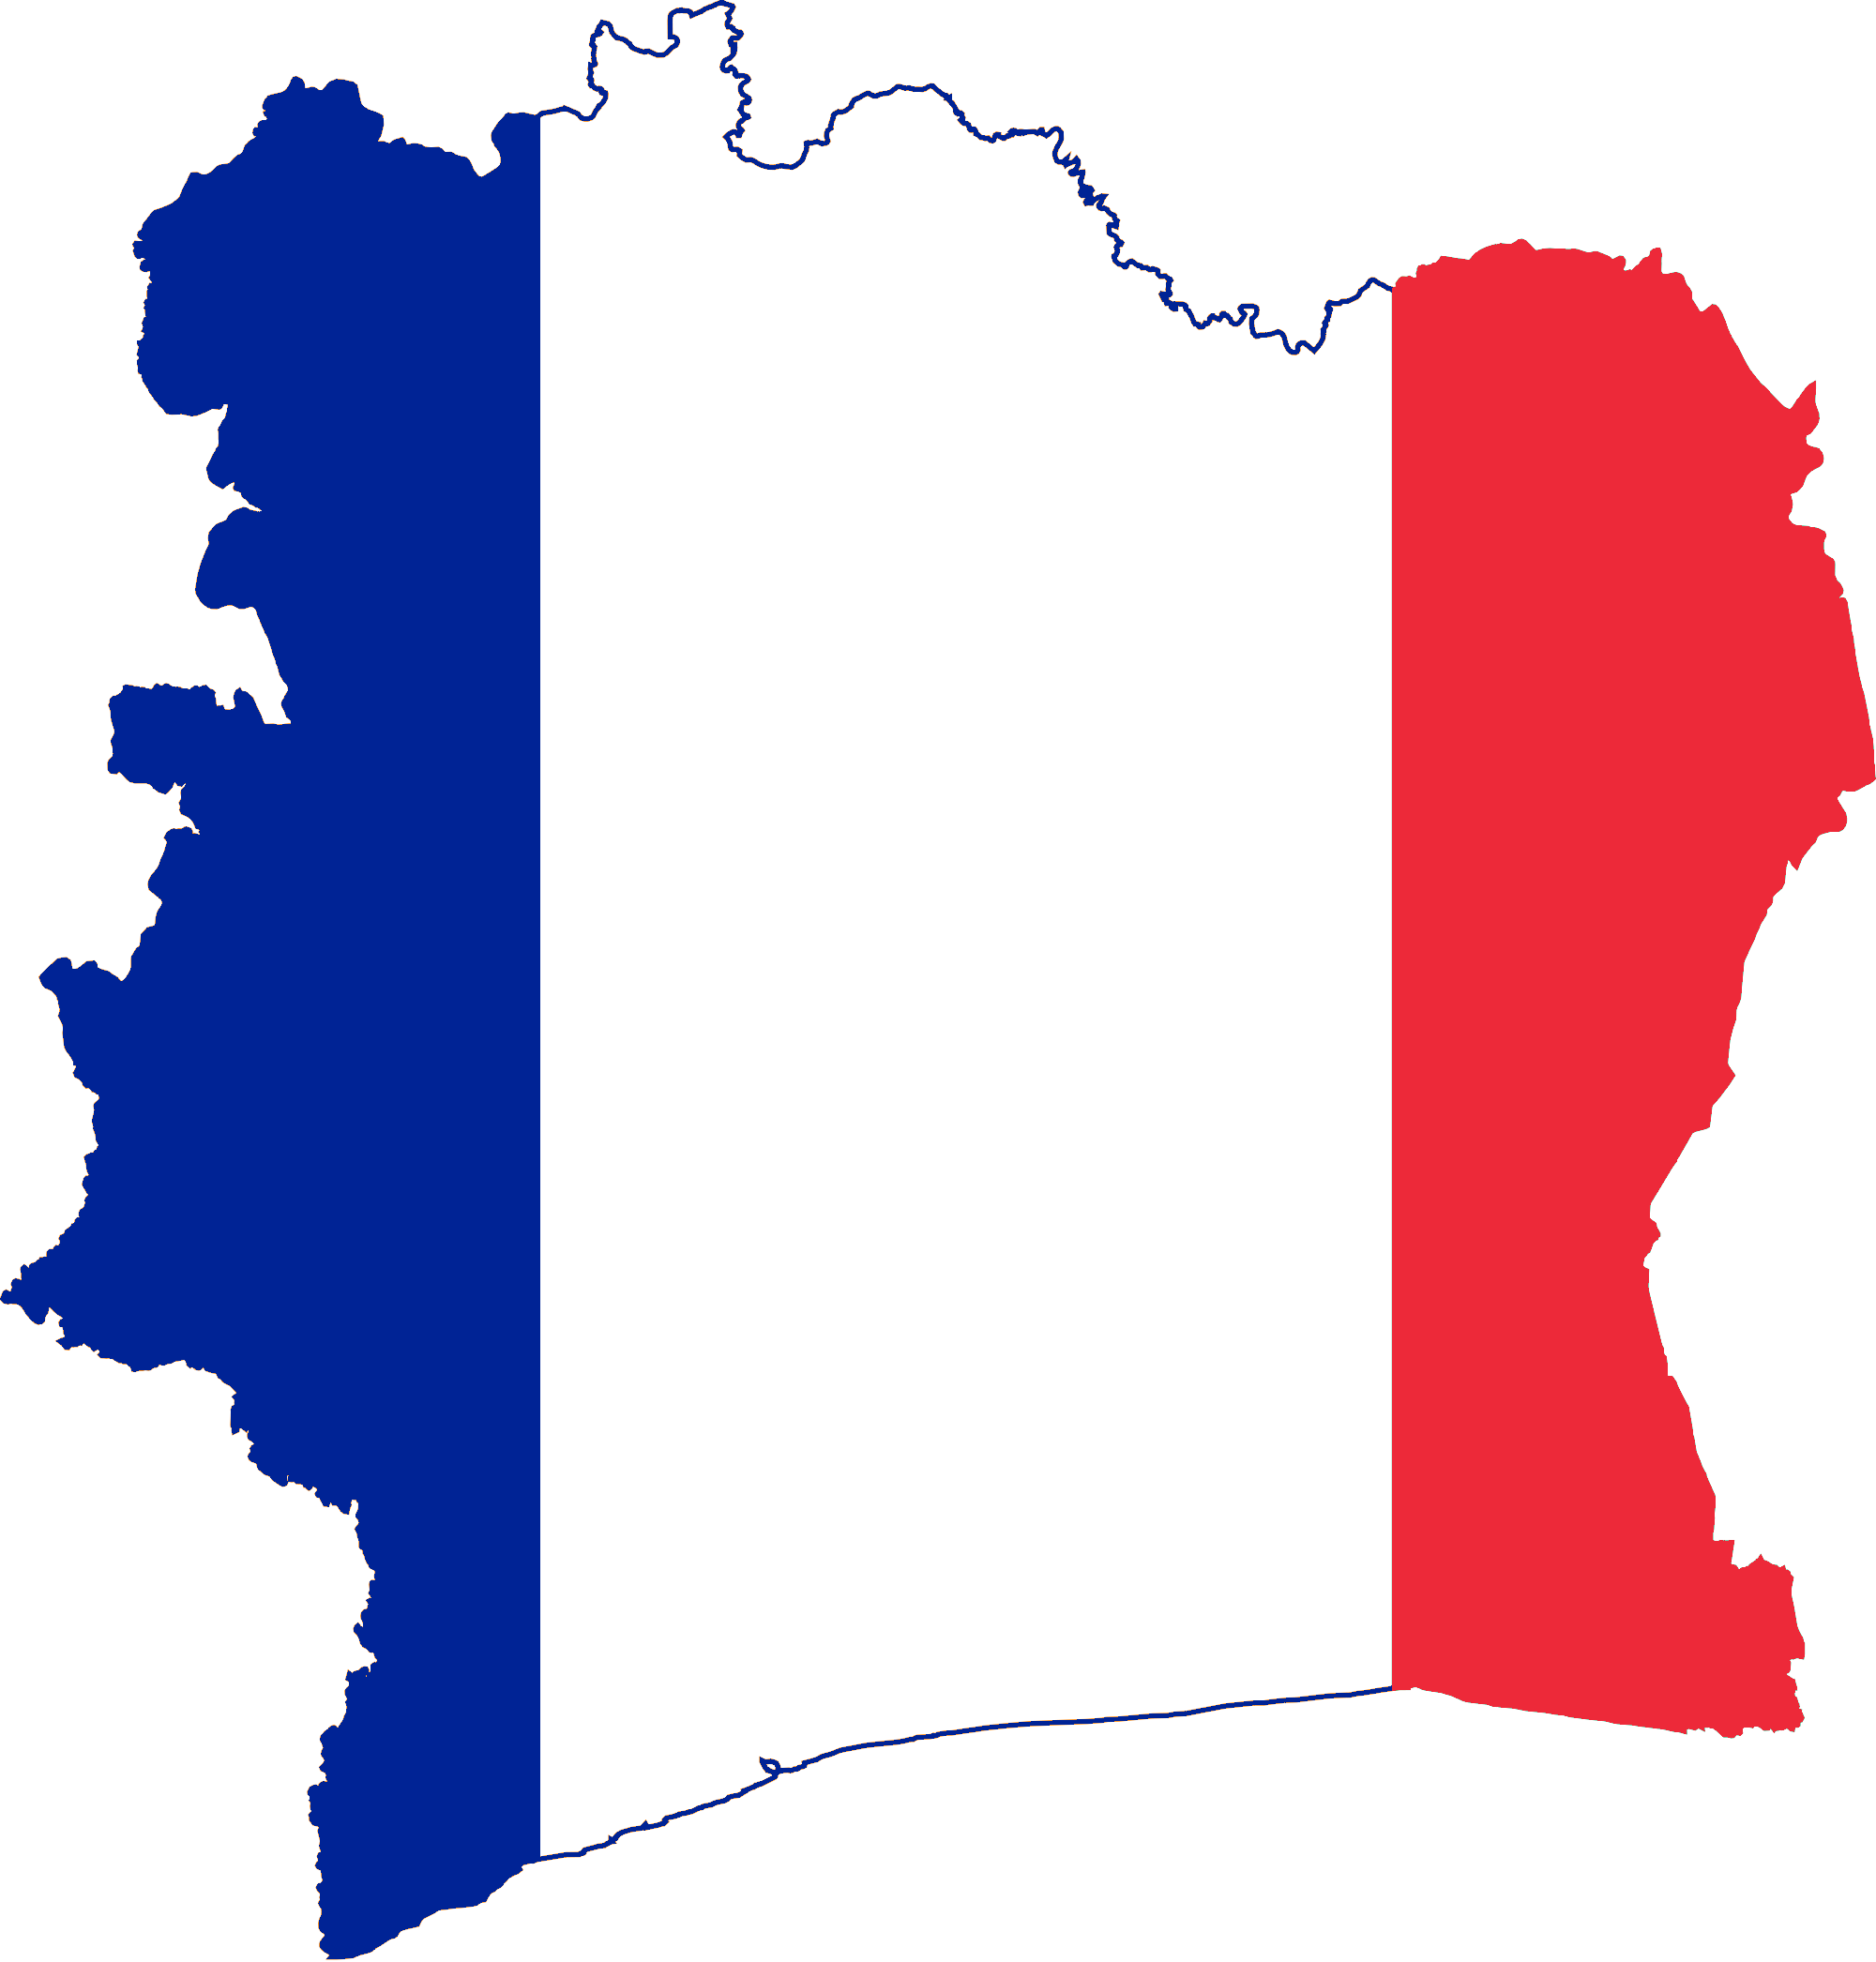 Transparent French Flag images